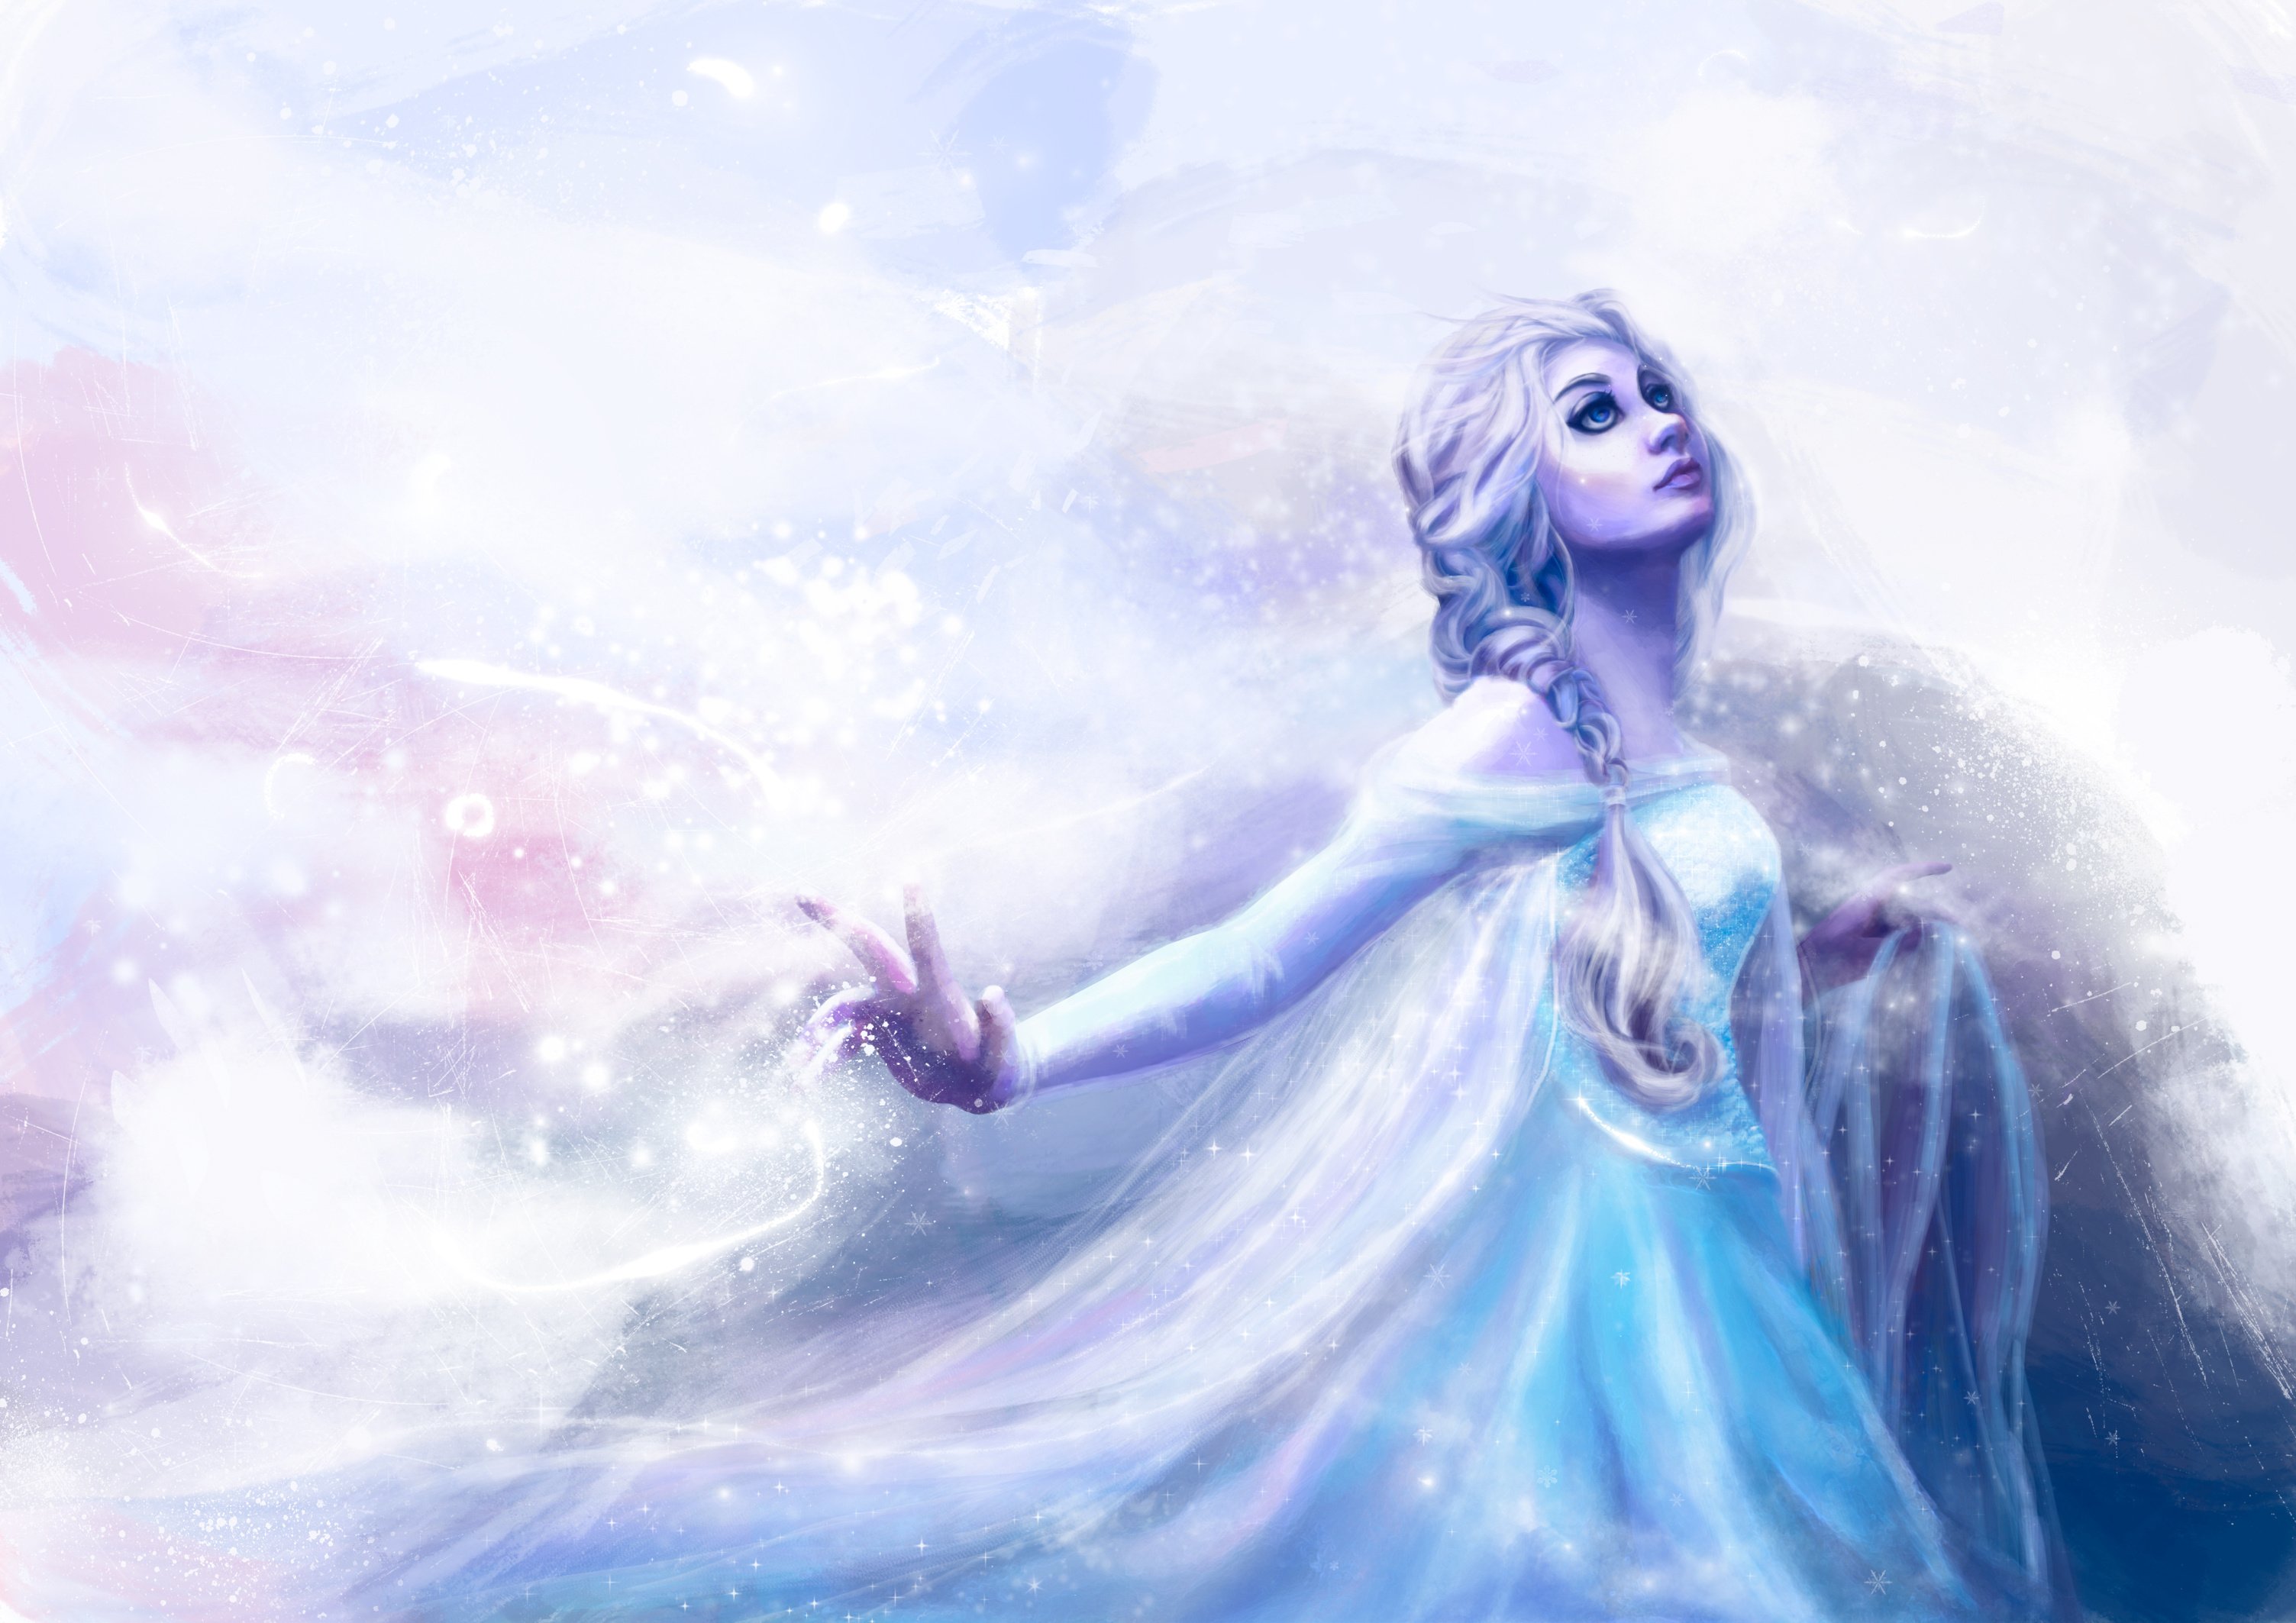  frozen snow queen elsa fantasy girl artwork mood wallpaper background